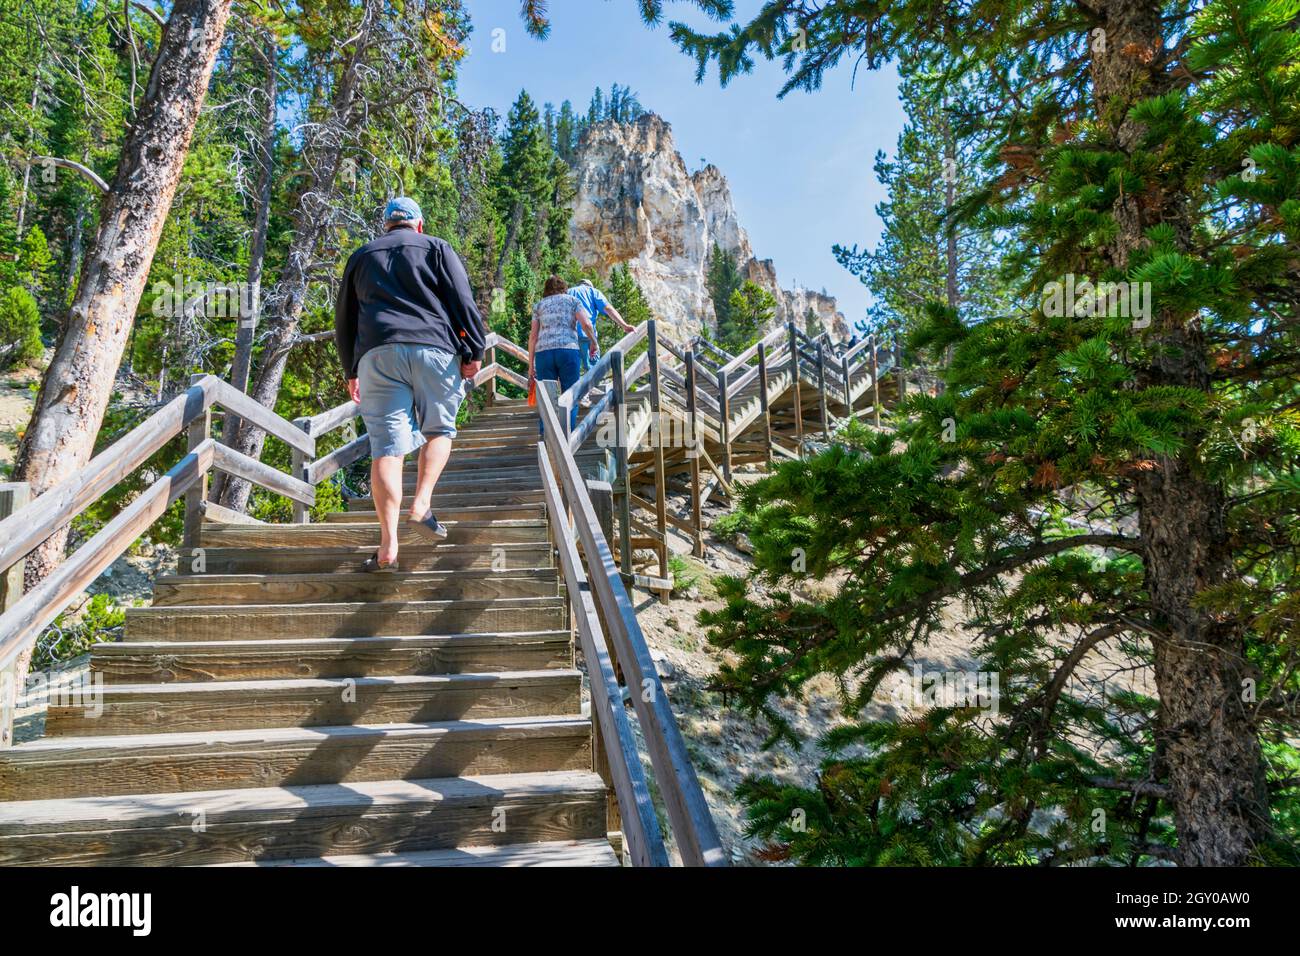 YELLOWSTONE, WY - SEPTEMBER 9: Tourist climbing a staircase in Yellowstone, WY on September 9, 2017. Stock Photo